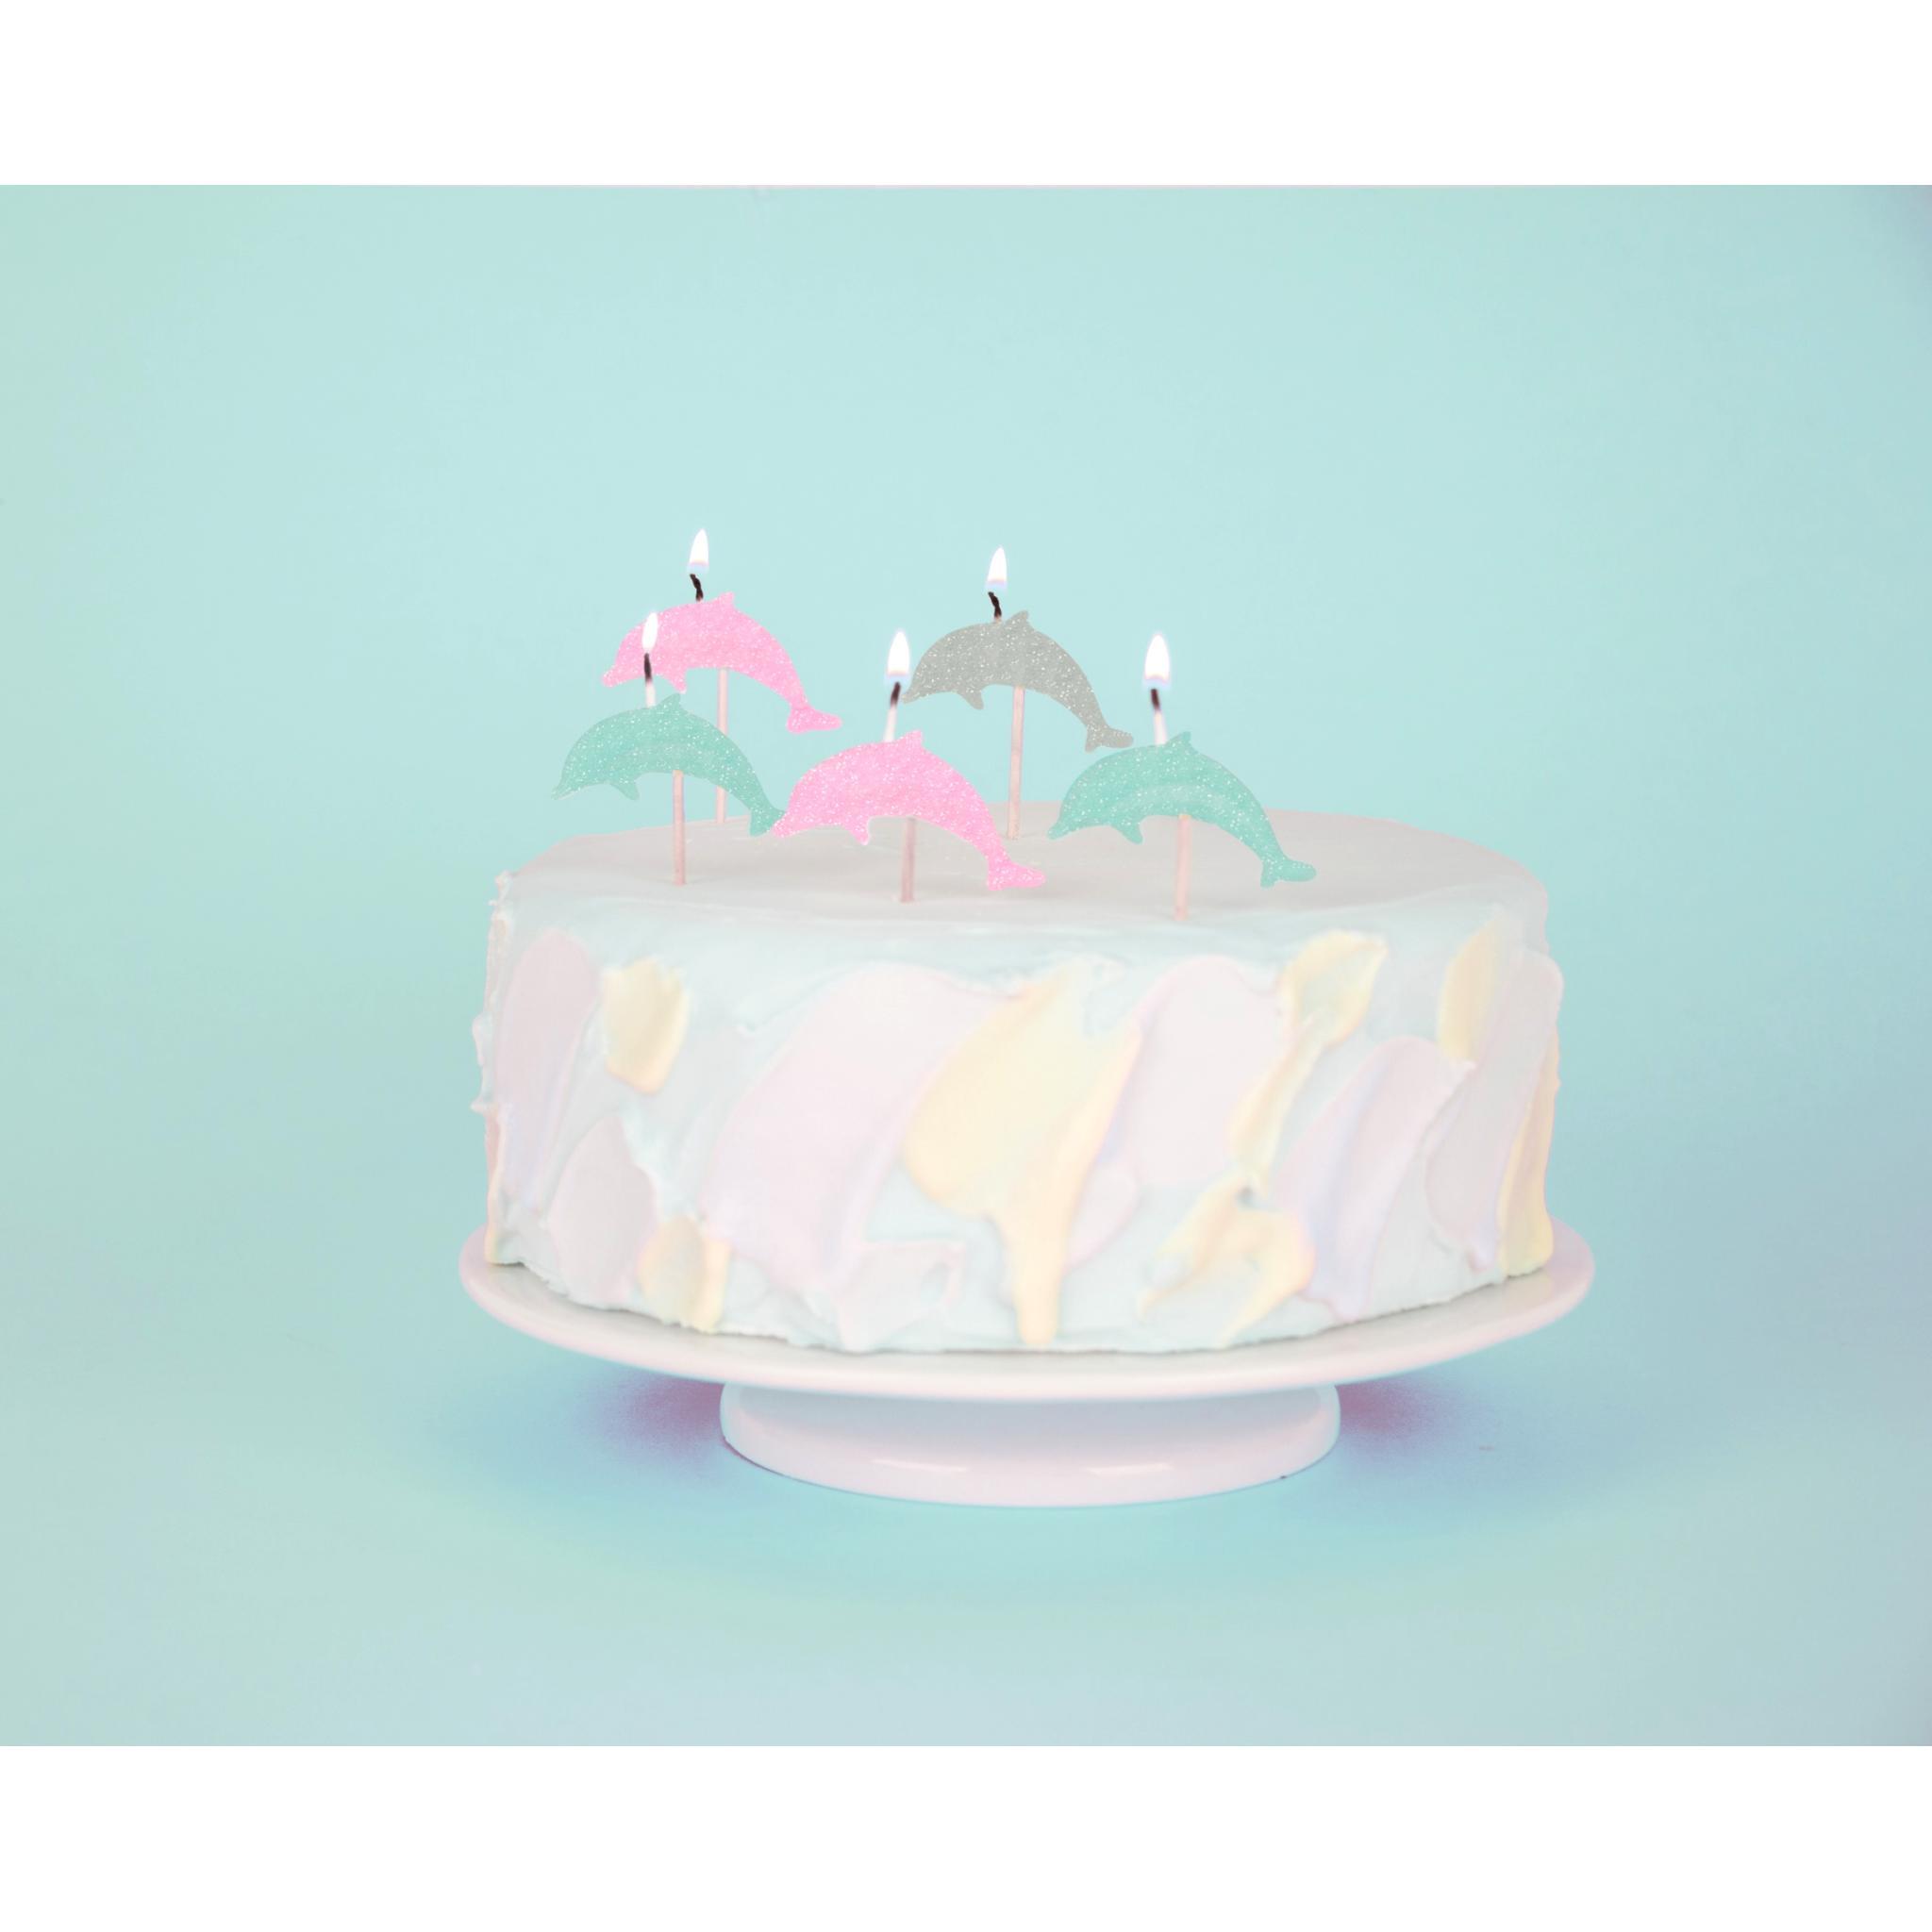 Decoración unicornio torta – Decora tu Fiesta